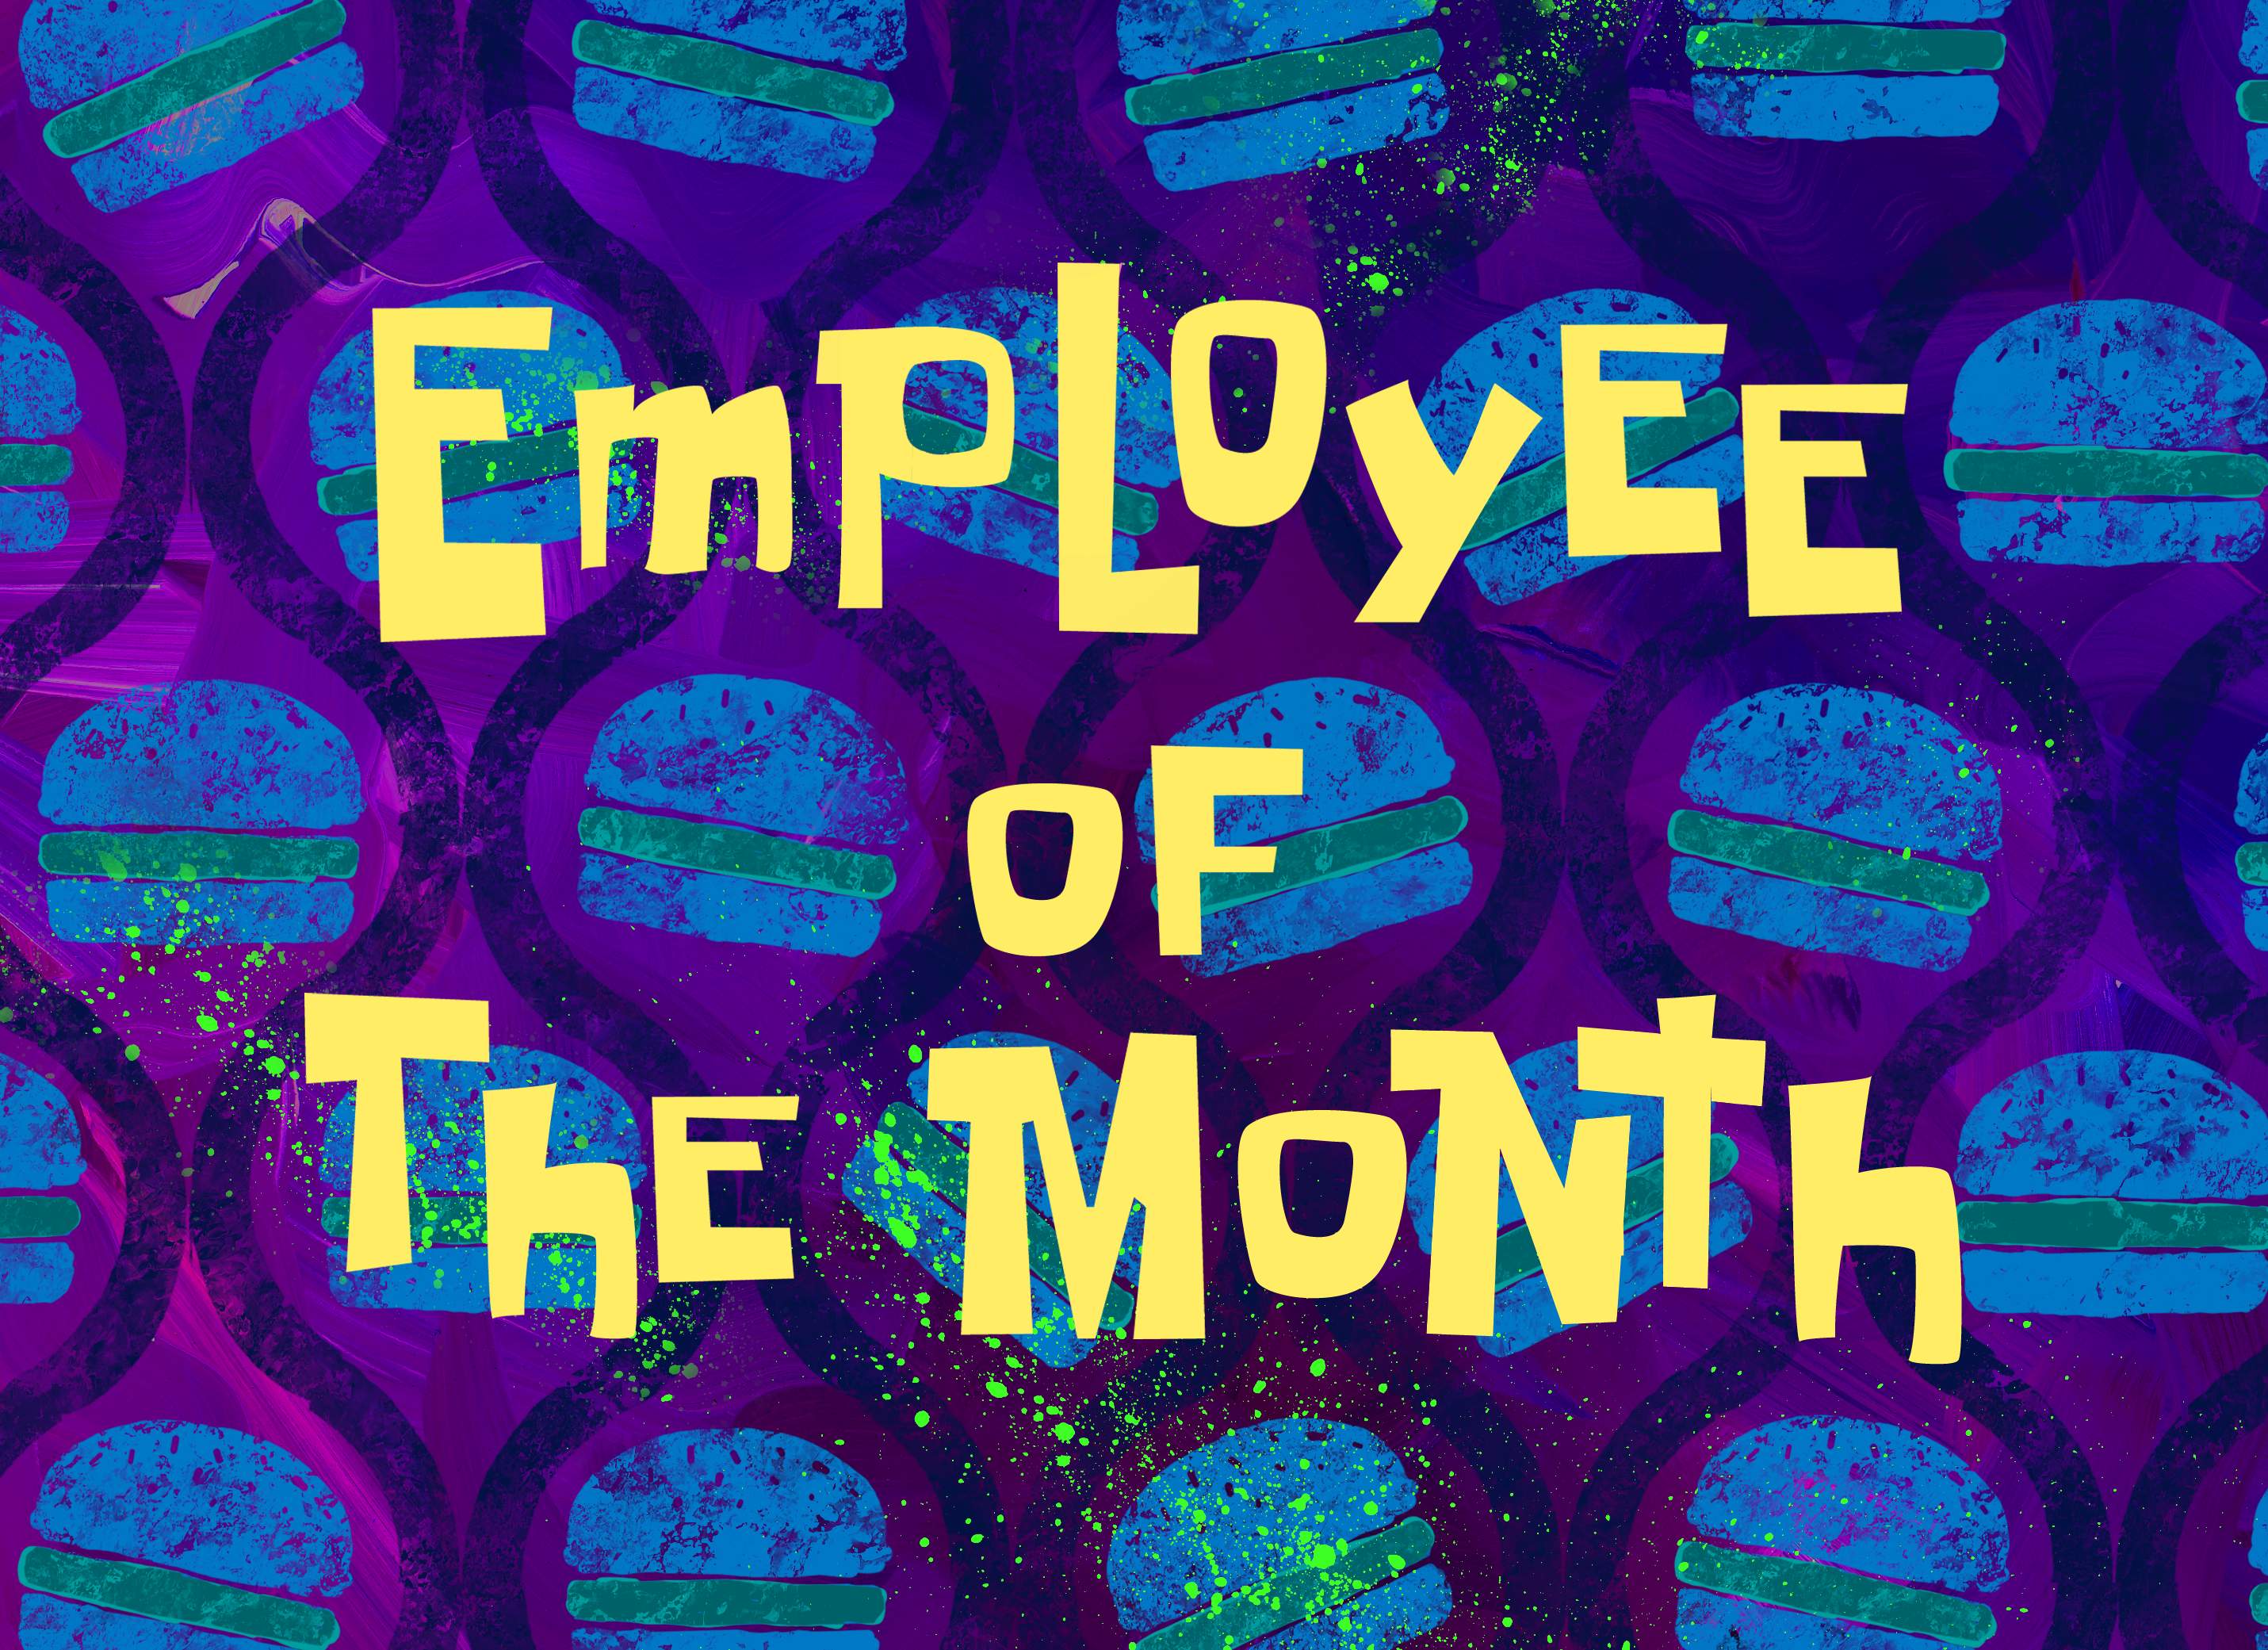 spongebob employee of the month game mac